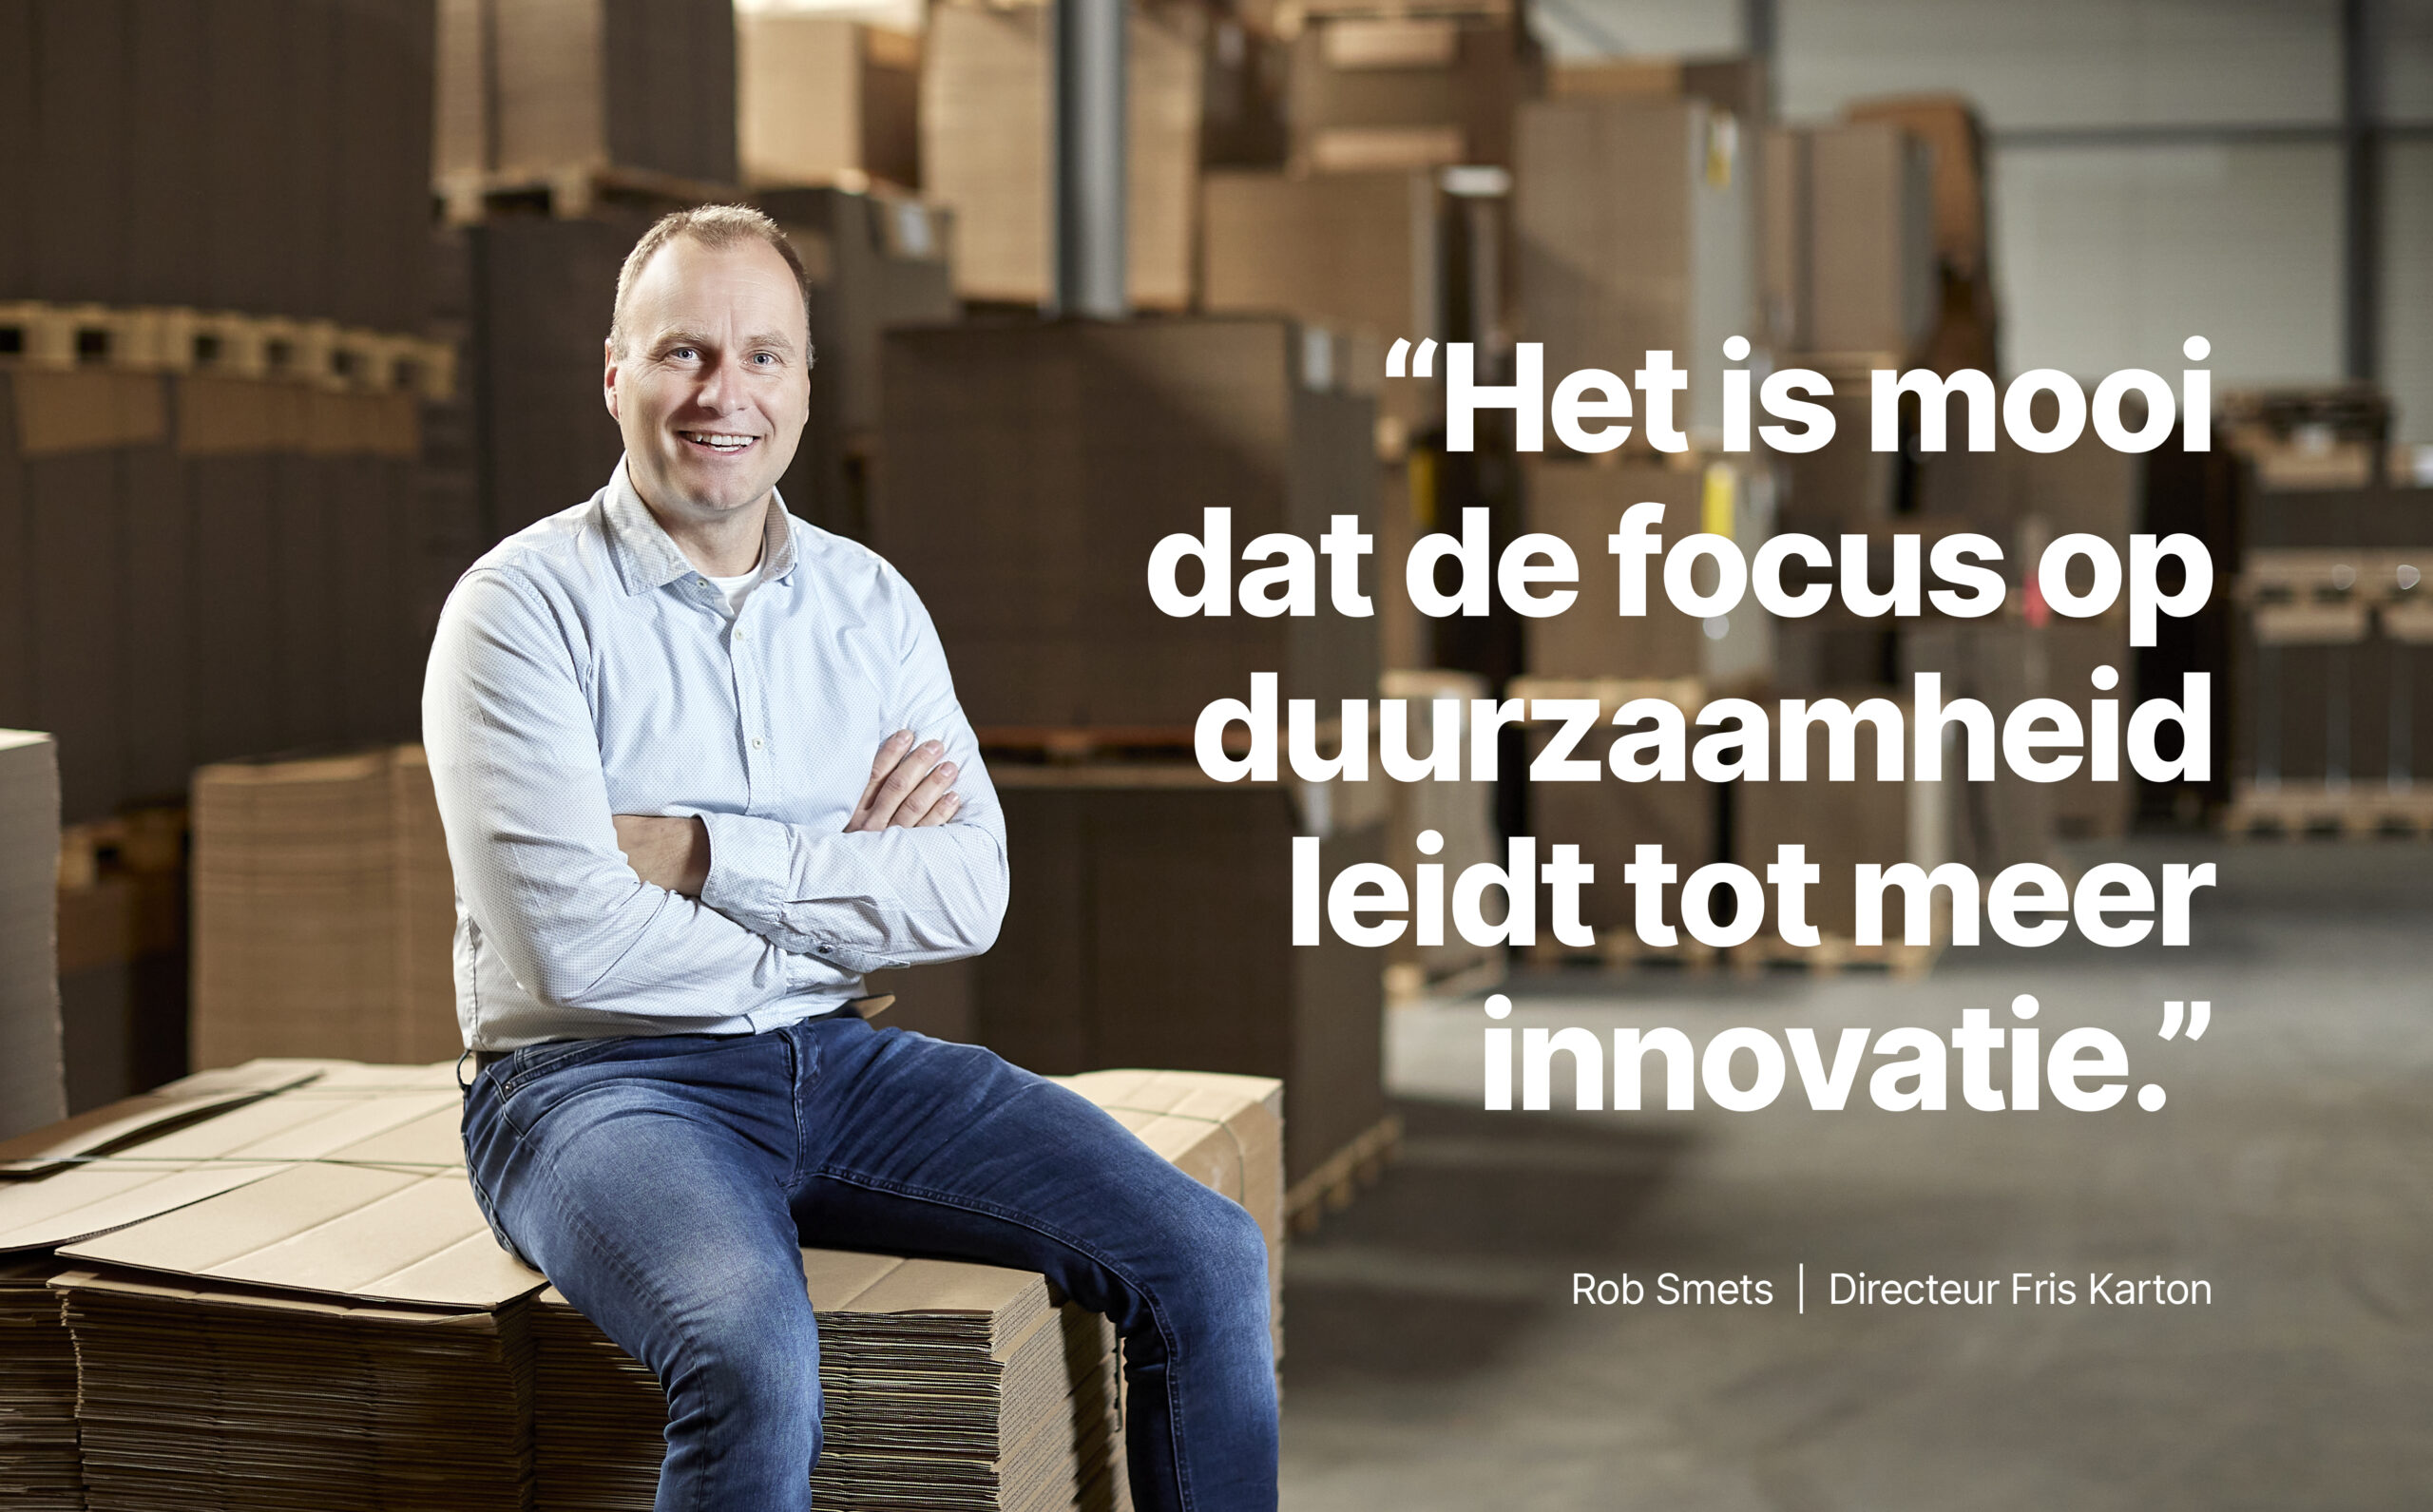 Duurzame dozenproducent Fris Karton brengt wereldprimeur naar Brabant